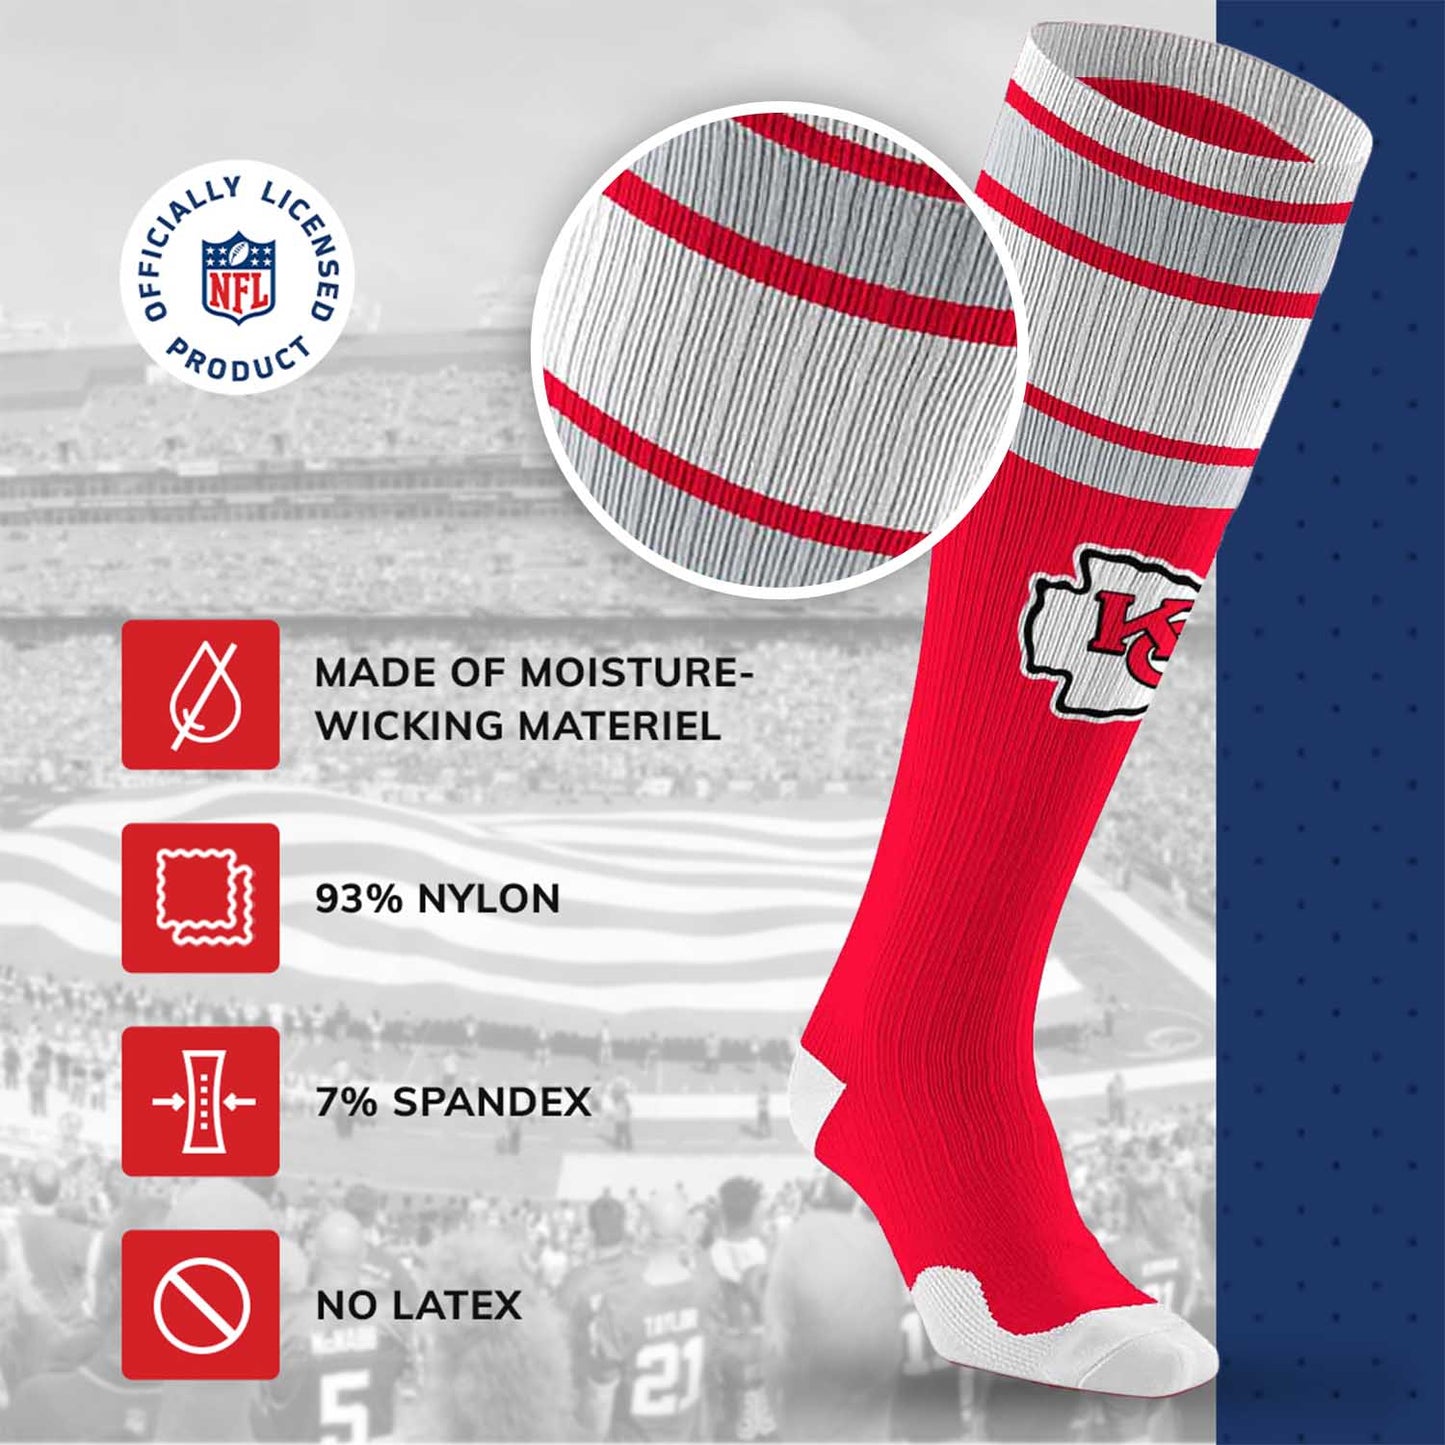 Kansas City Chiefs NFL Adult Compression Socks - Red